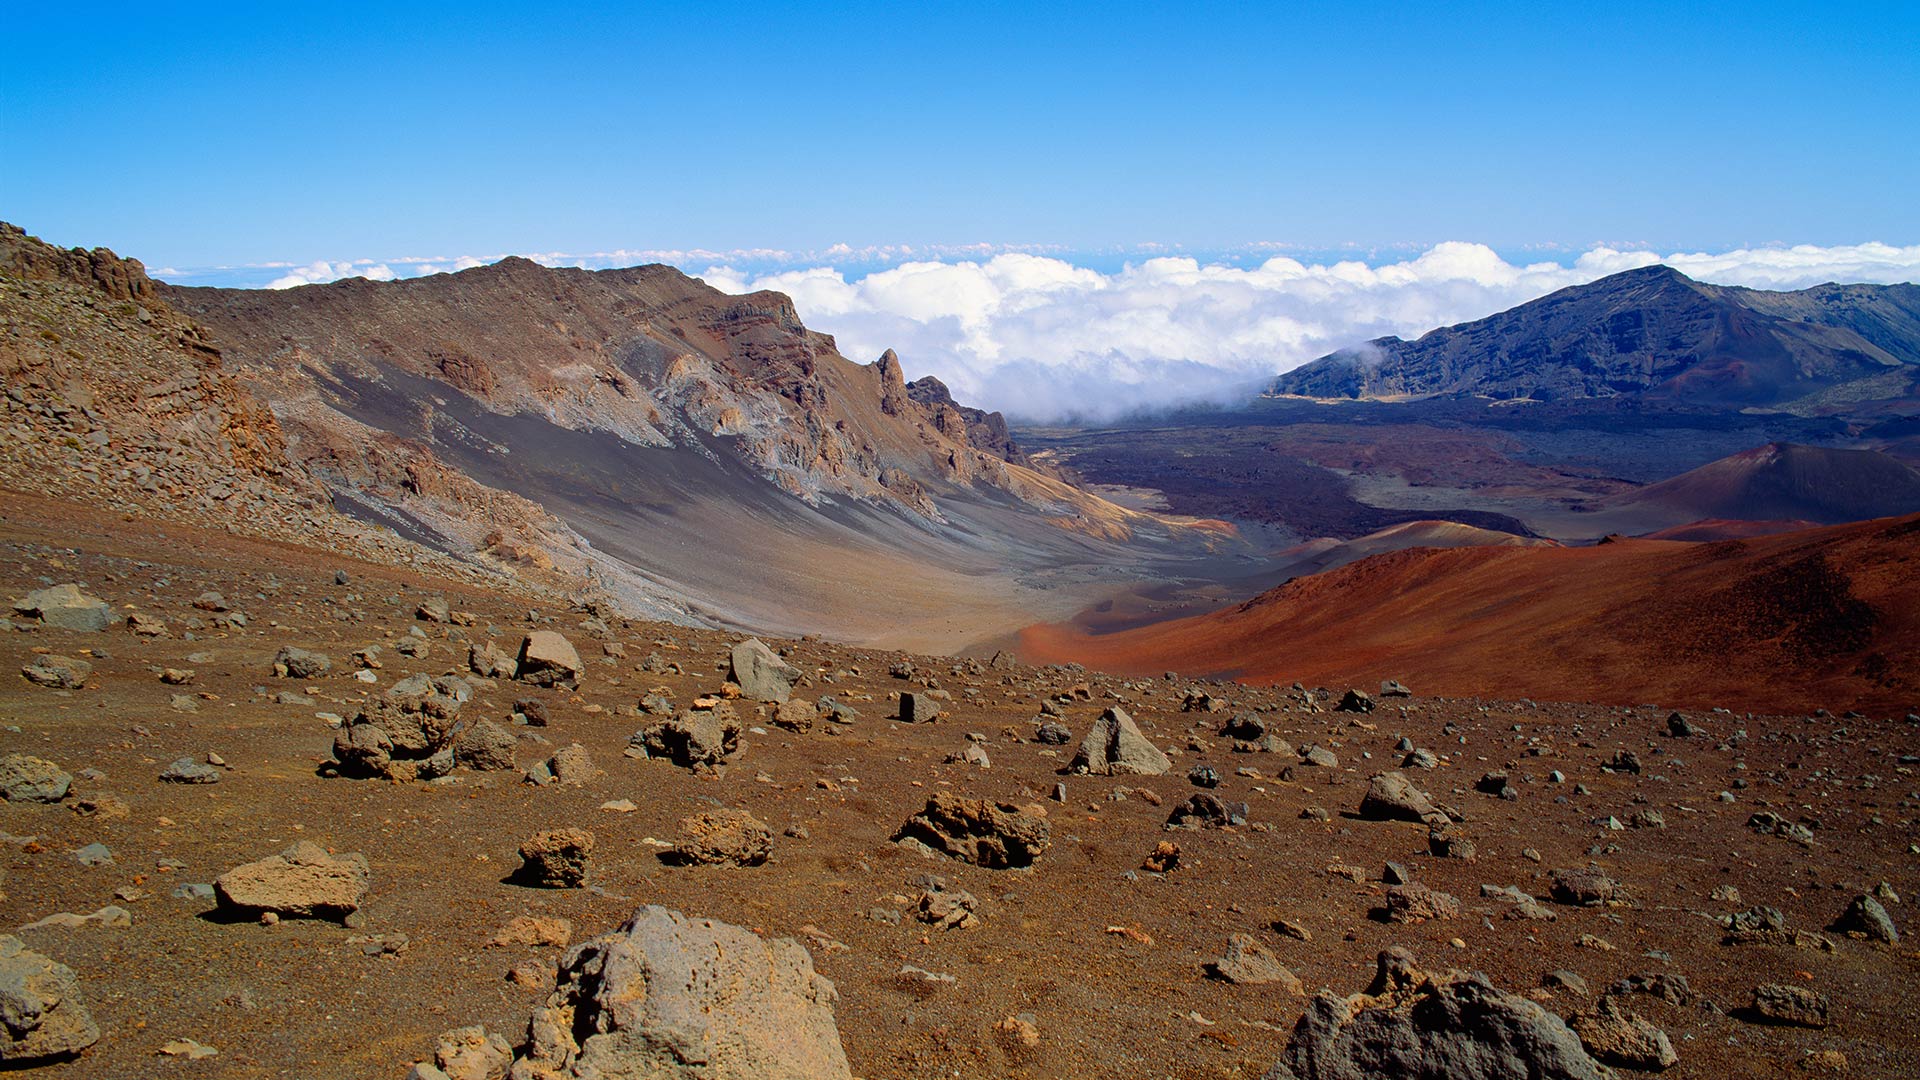 Views of Haleakala Crater in Maui, Hawaii